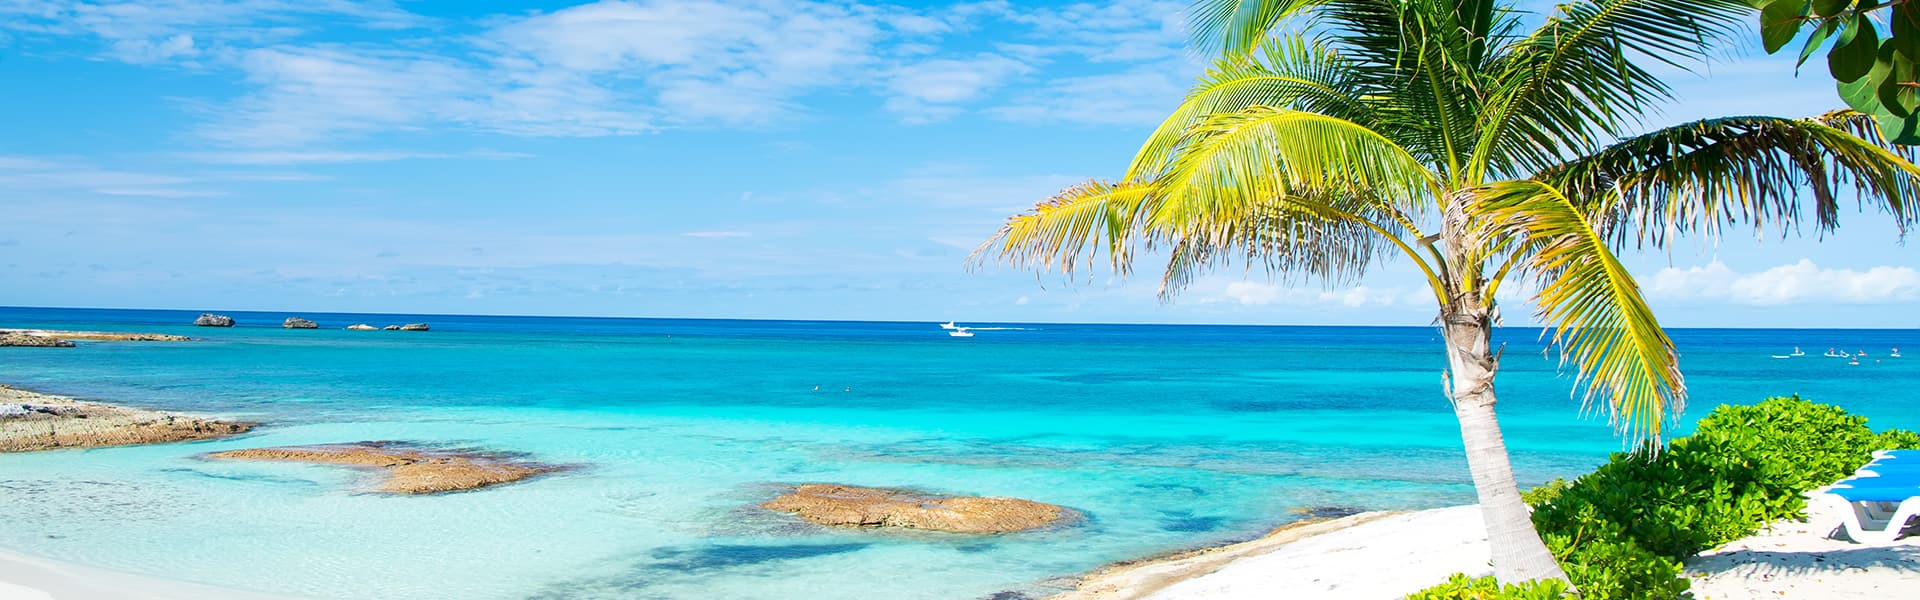 Caribbean: Great Stirrup Cay & Cozumel